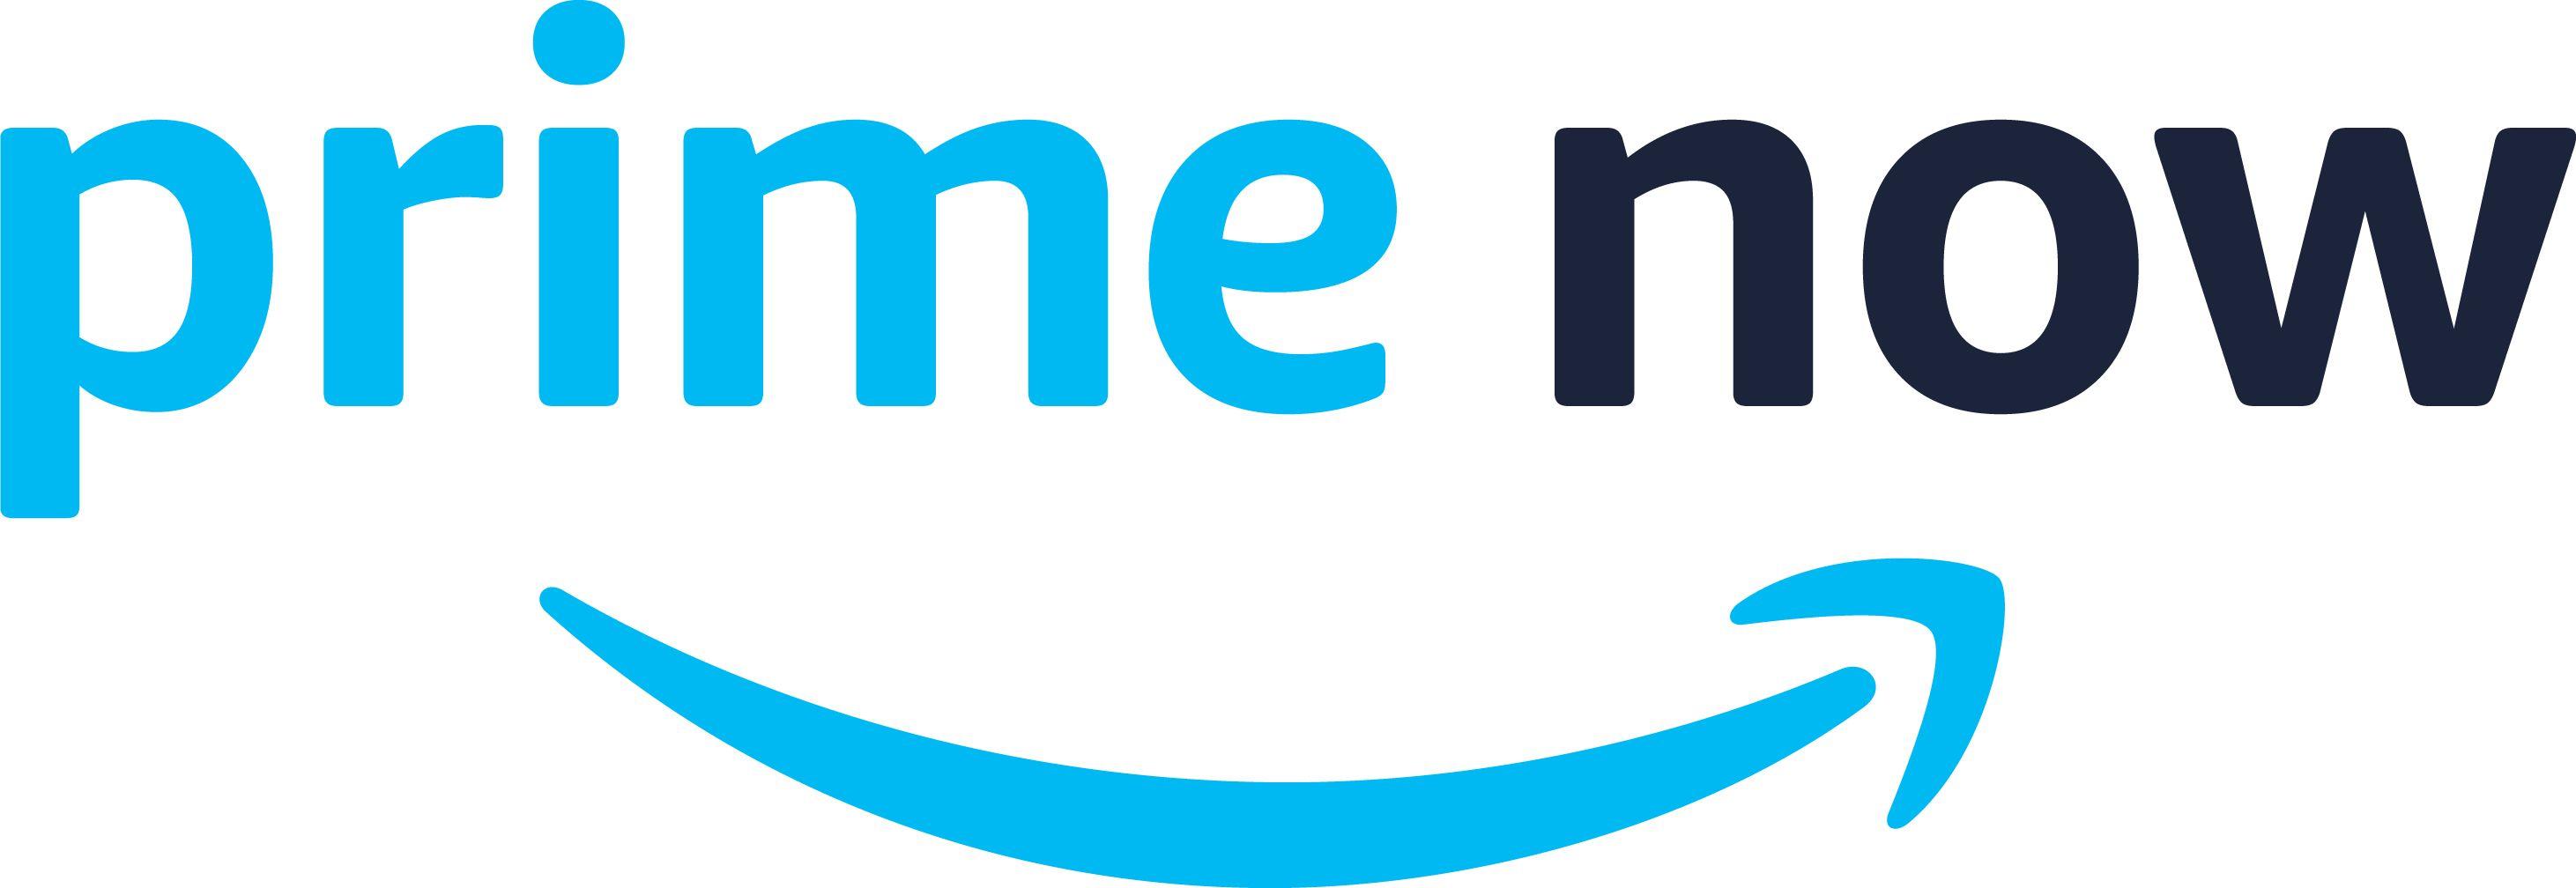 Amazon Prime Air Logo - Images and videos | Amazon.com, Inc. - Press Room